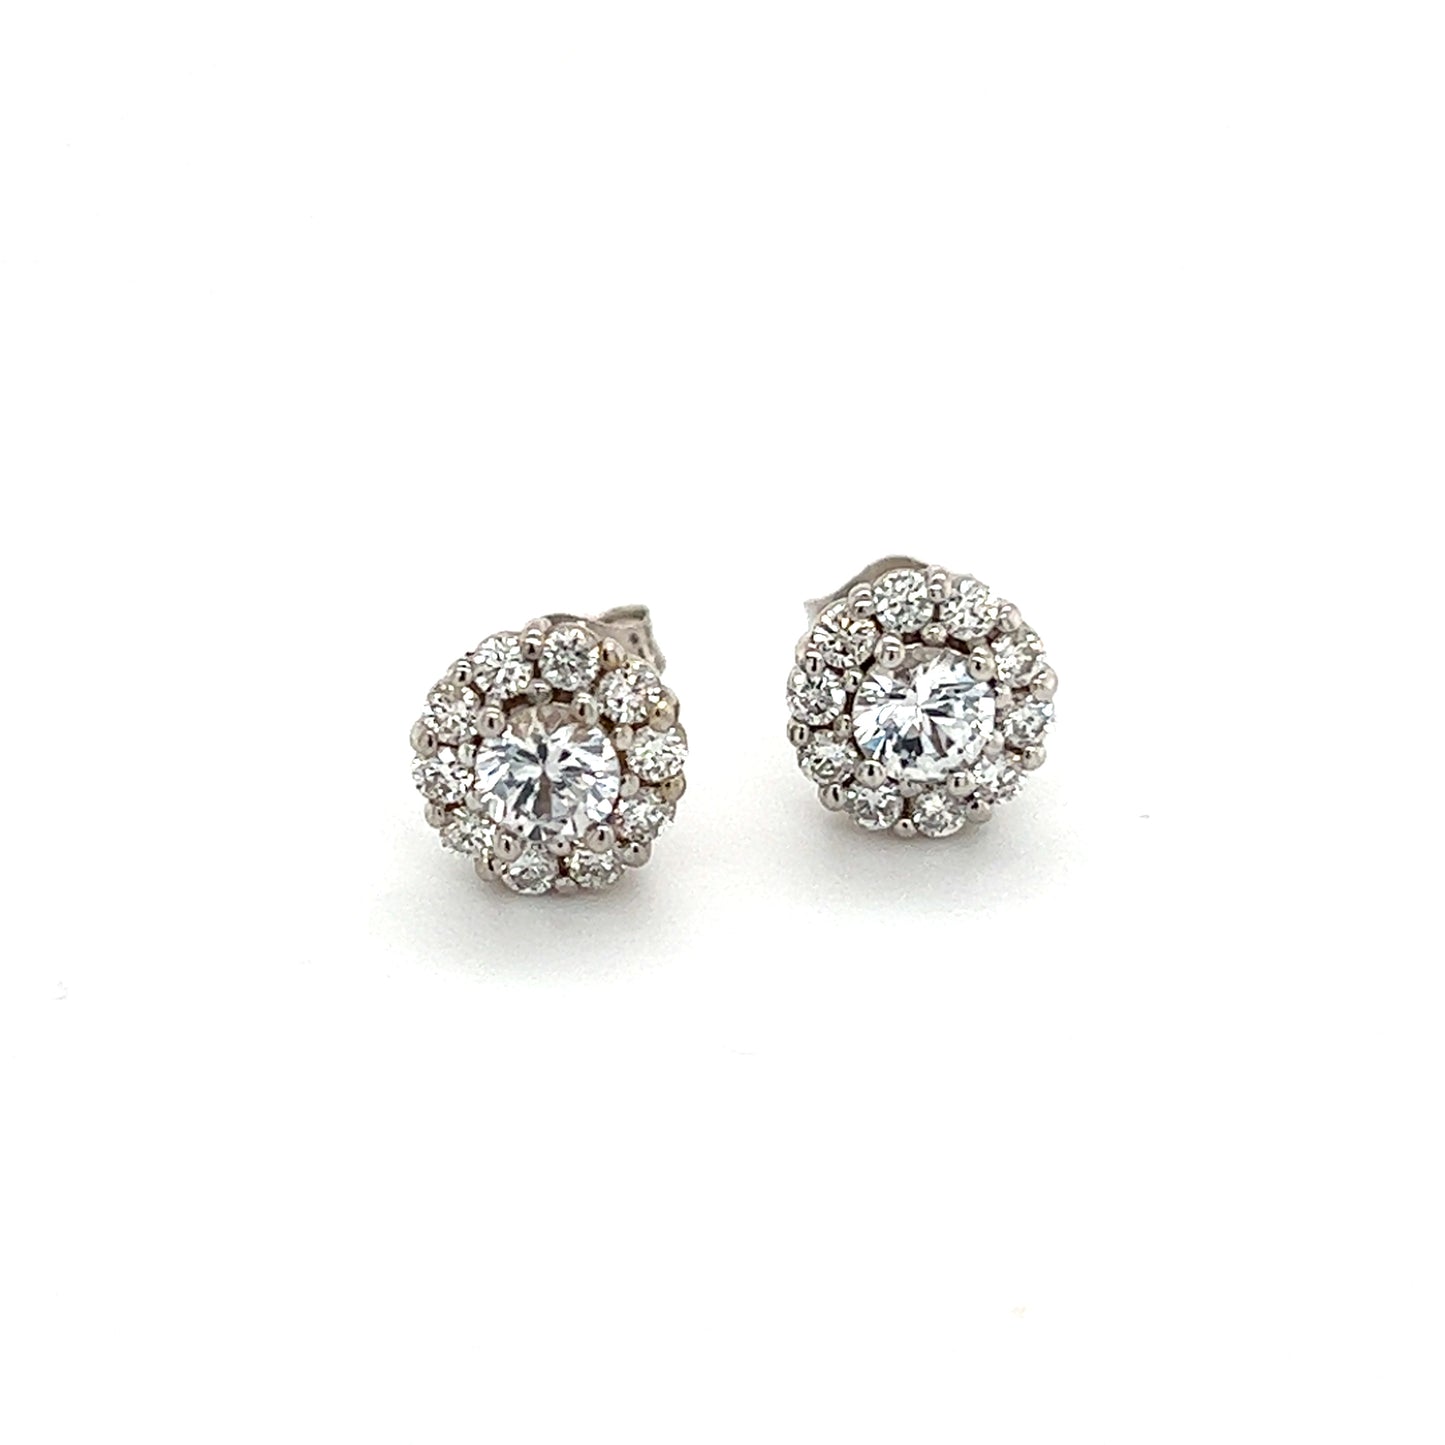 Natural Sapphire Diamond Earrings 14k Gold 1.25 TCW Certified $3,950 215096 - Certified Estate Jewelry